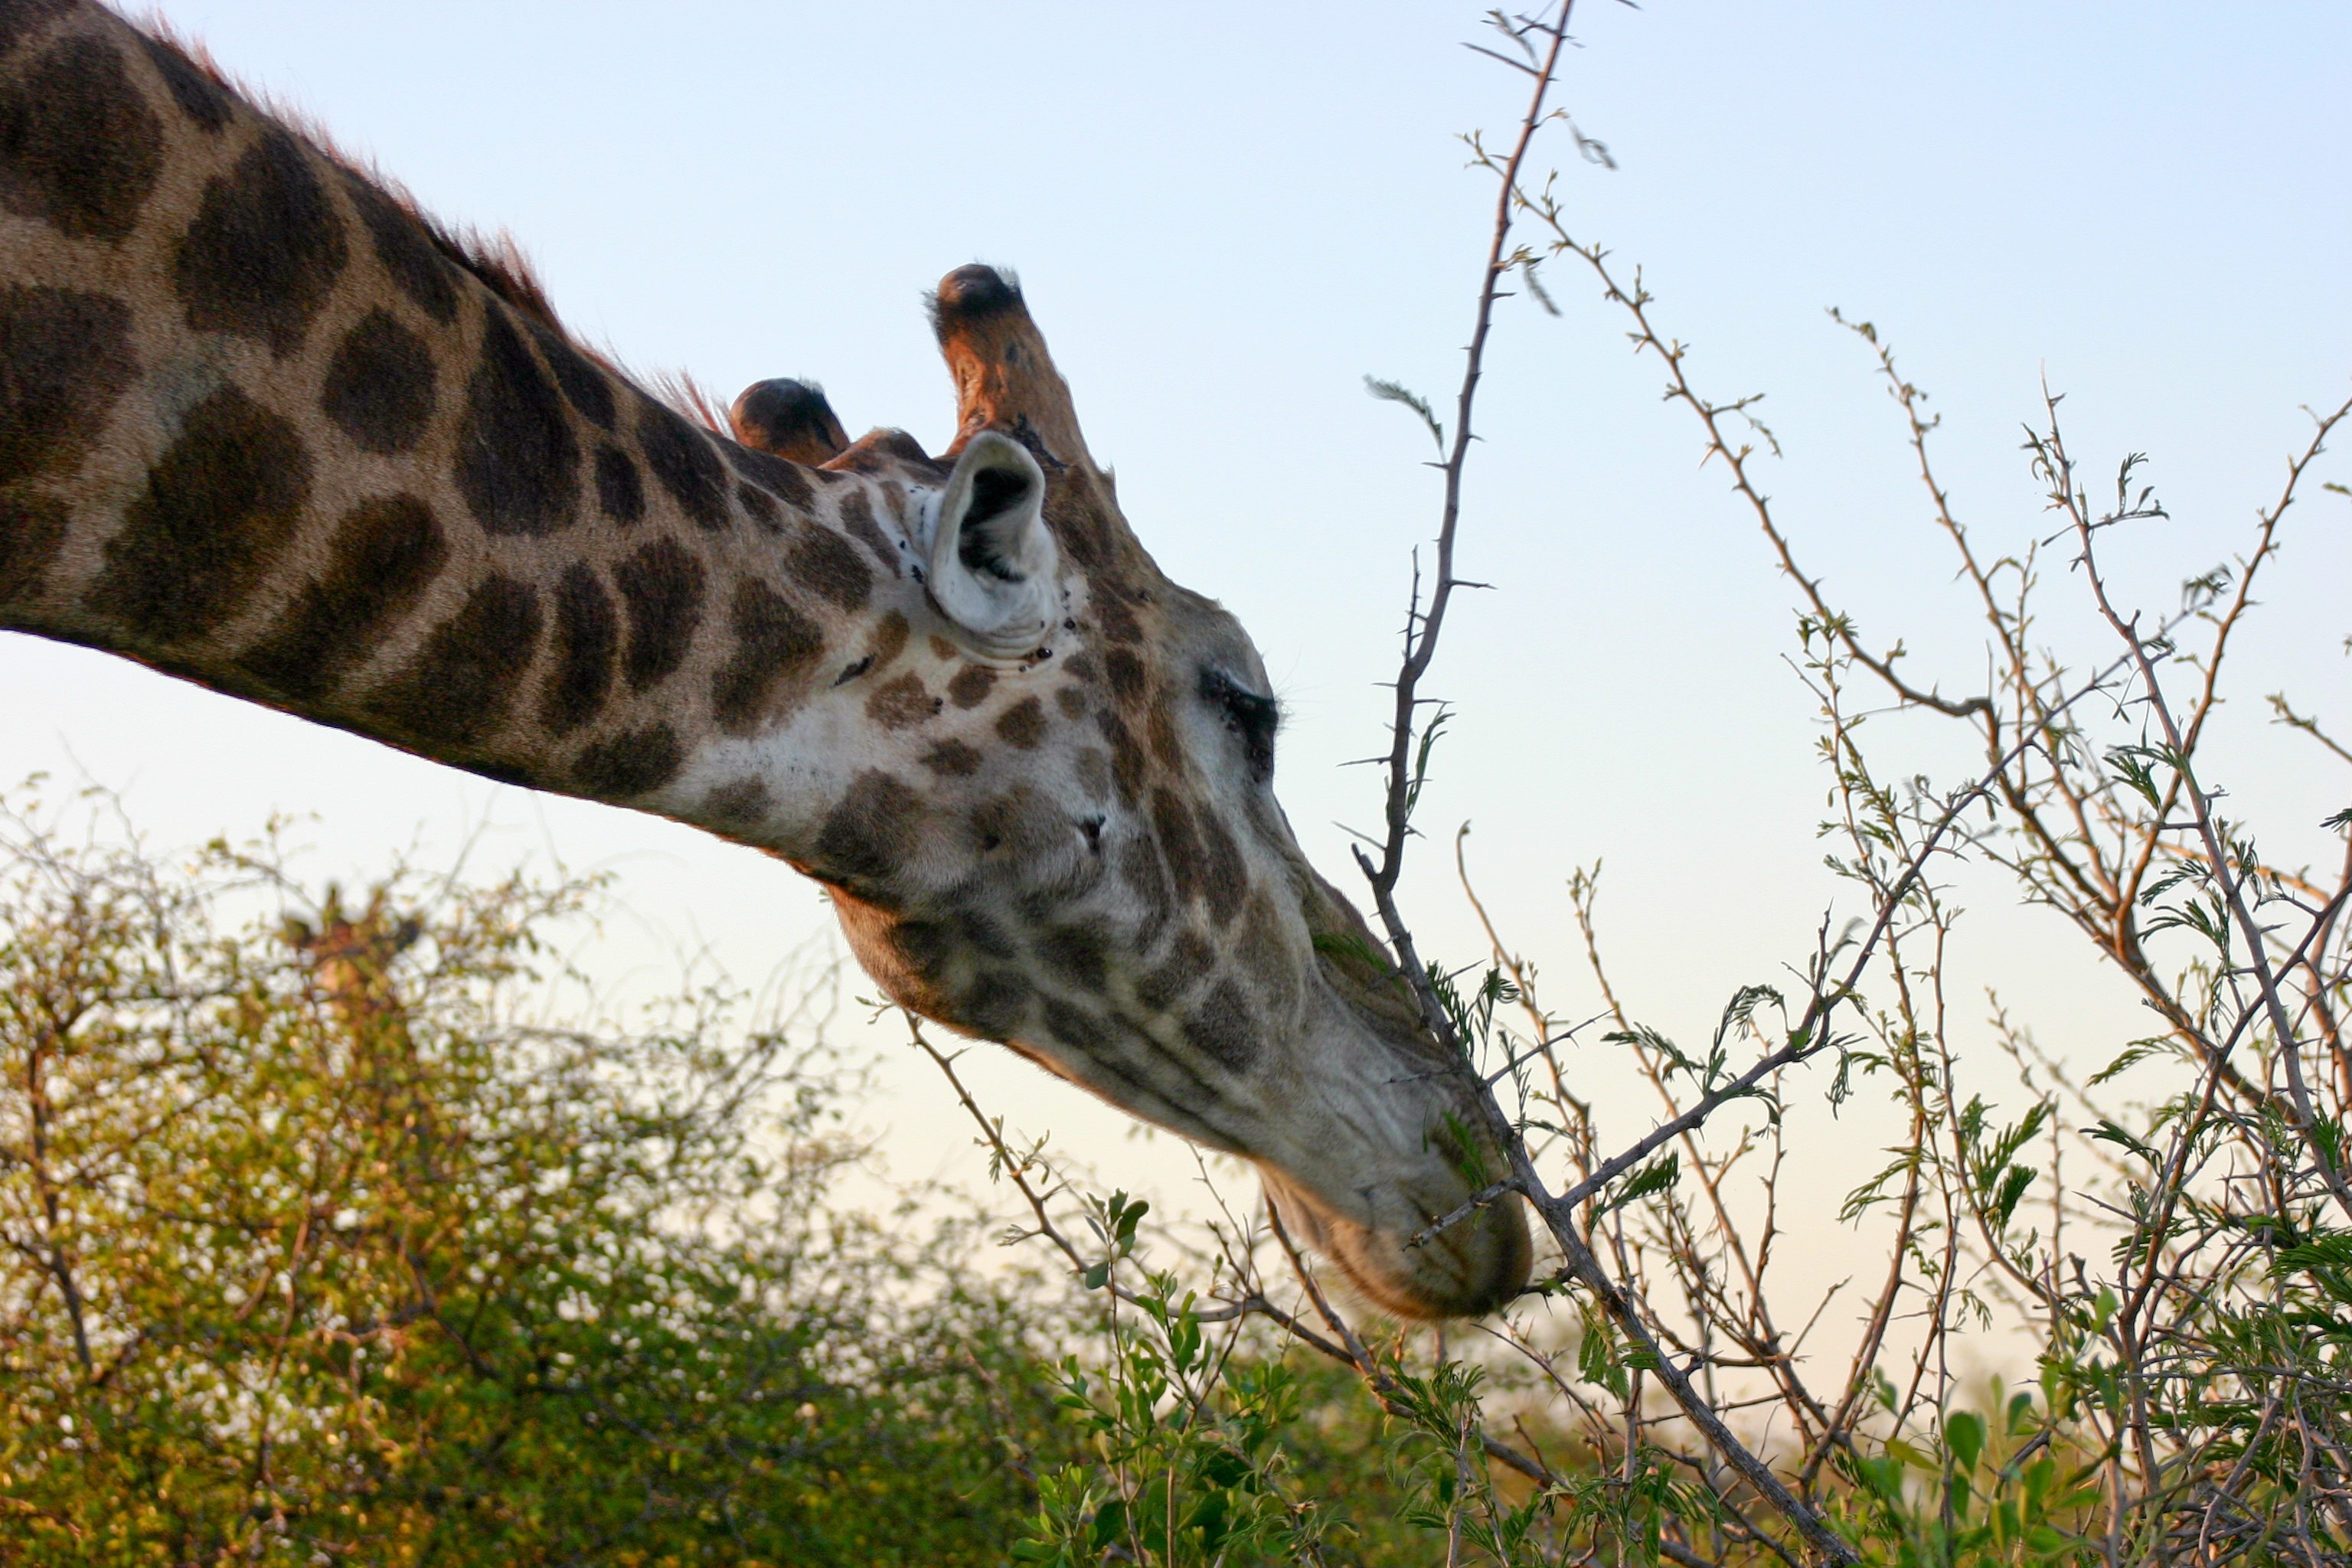 giraffe animal biting on tree branch during daytime